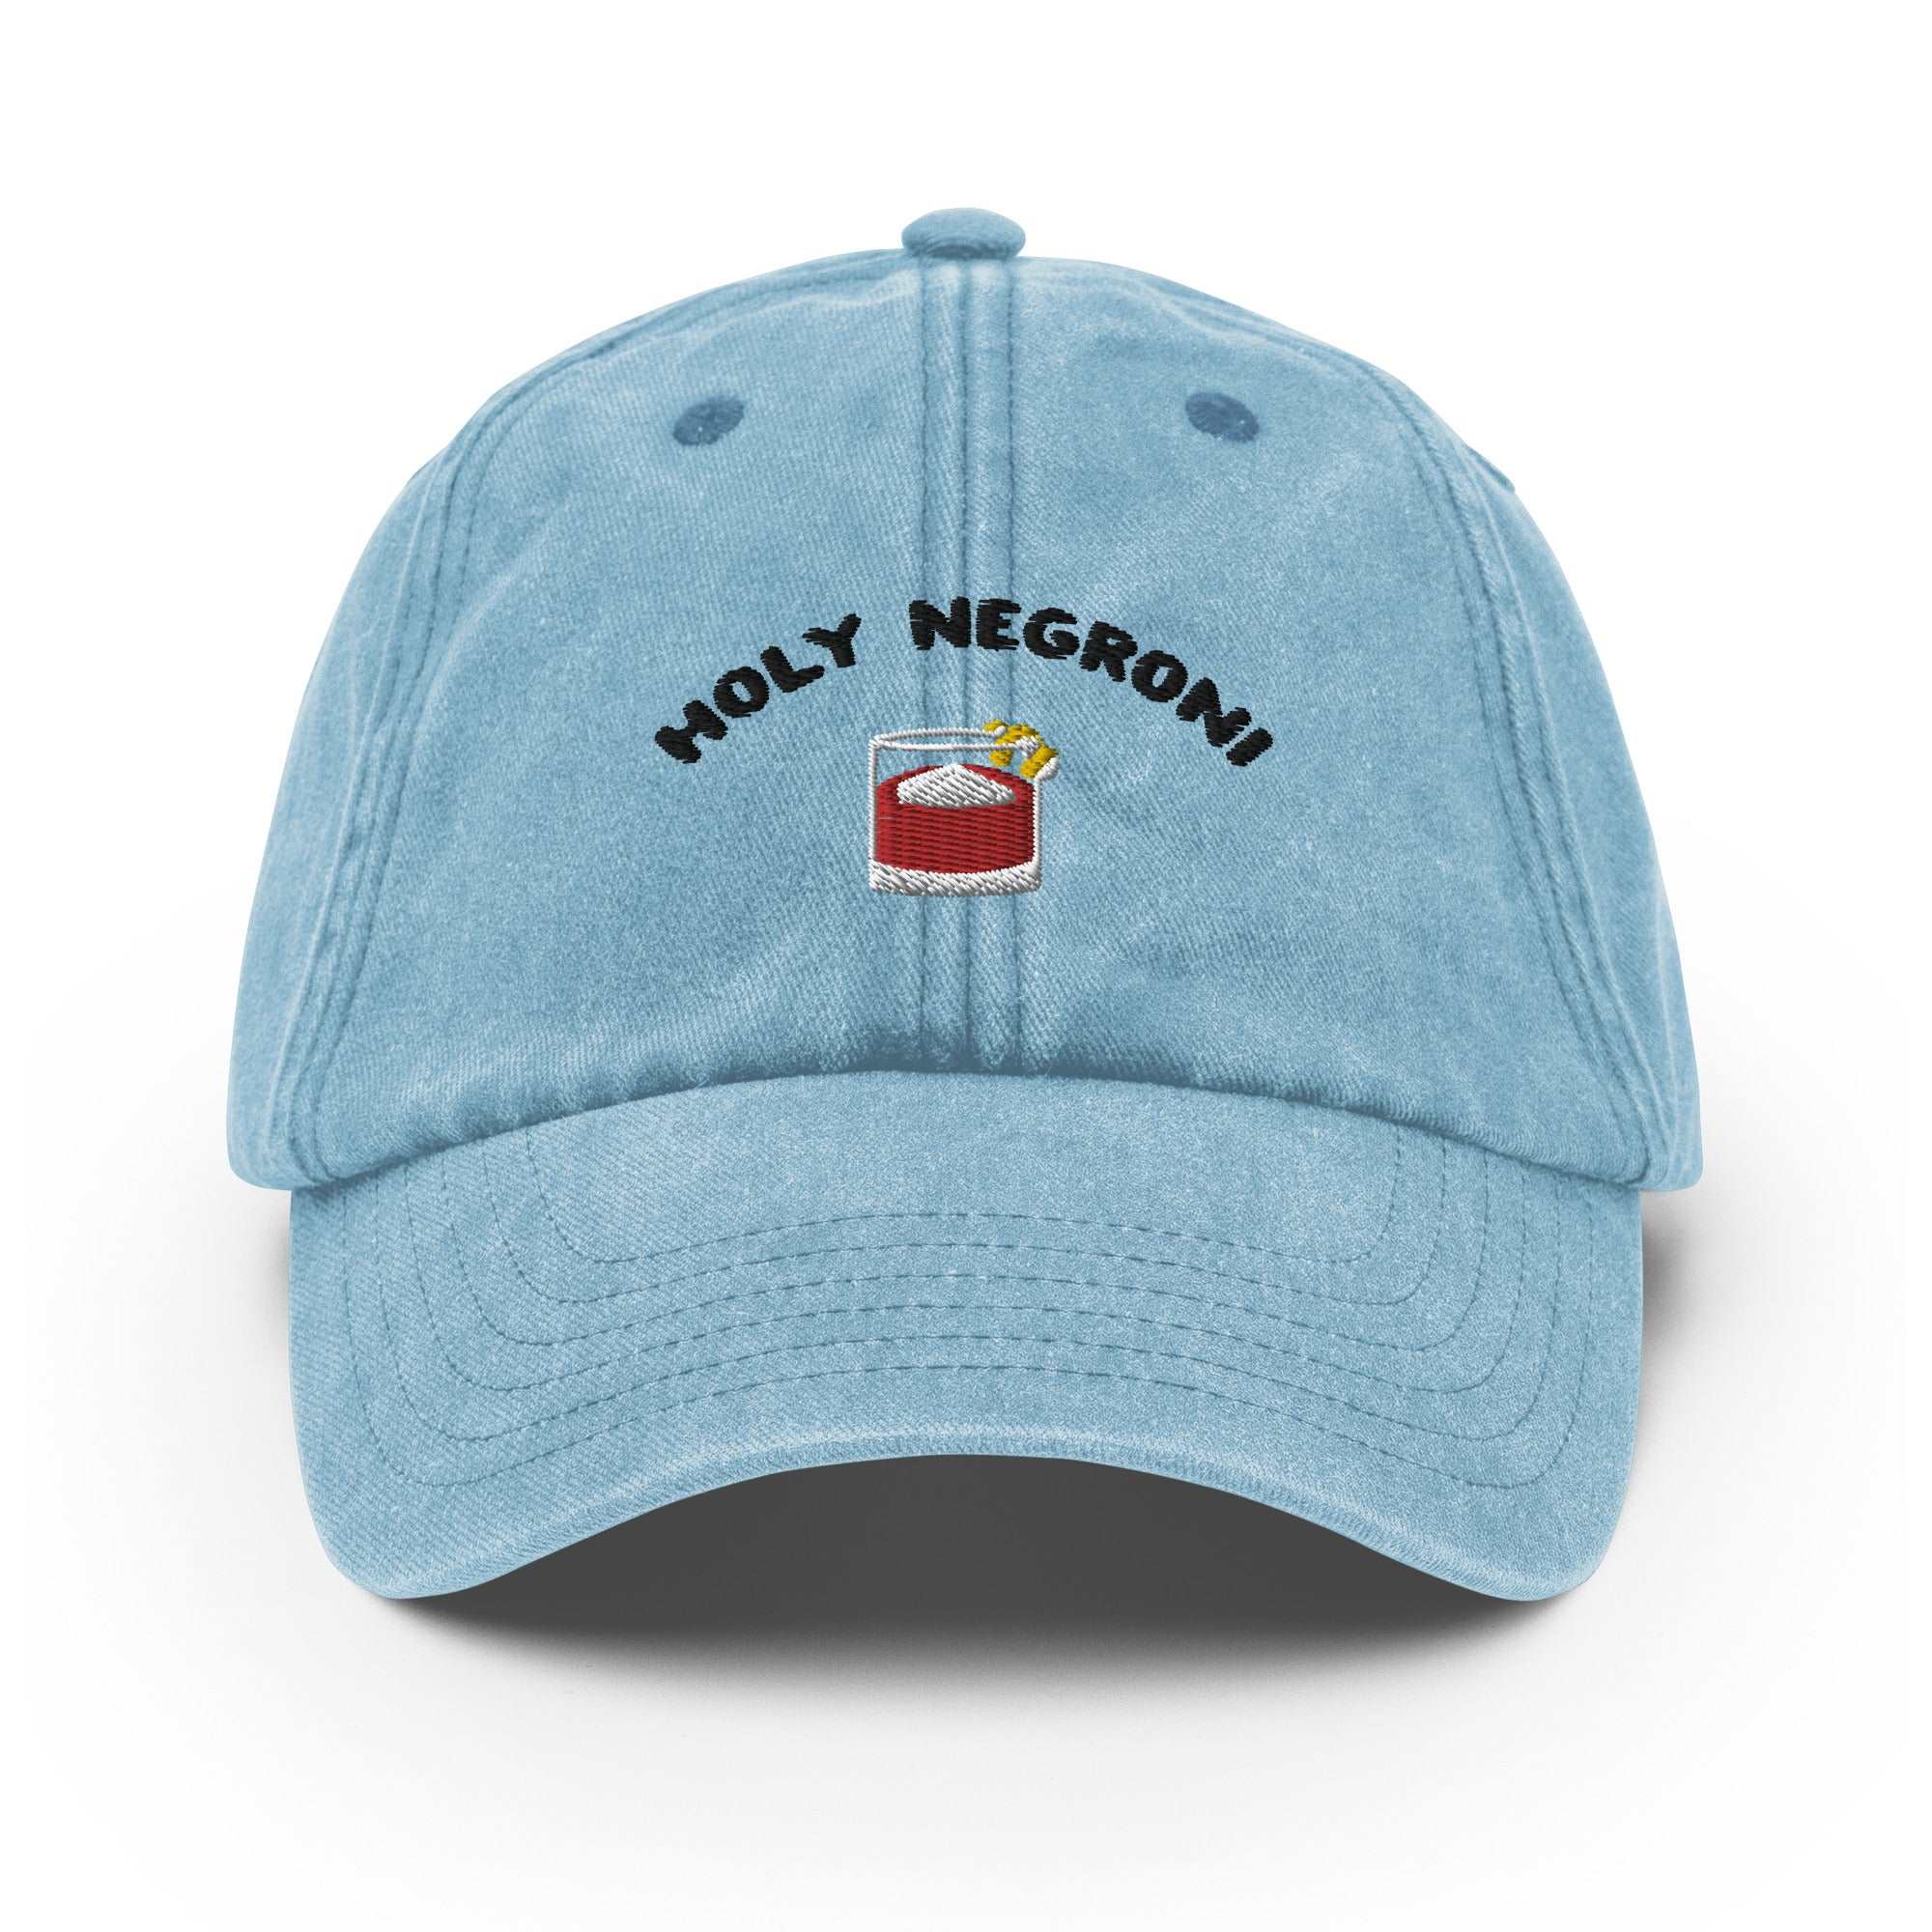 Holy Negroni Vintage Cap - The Refined Spirit